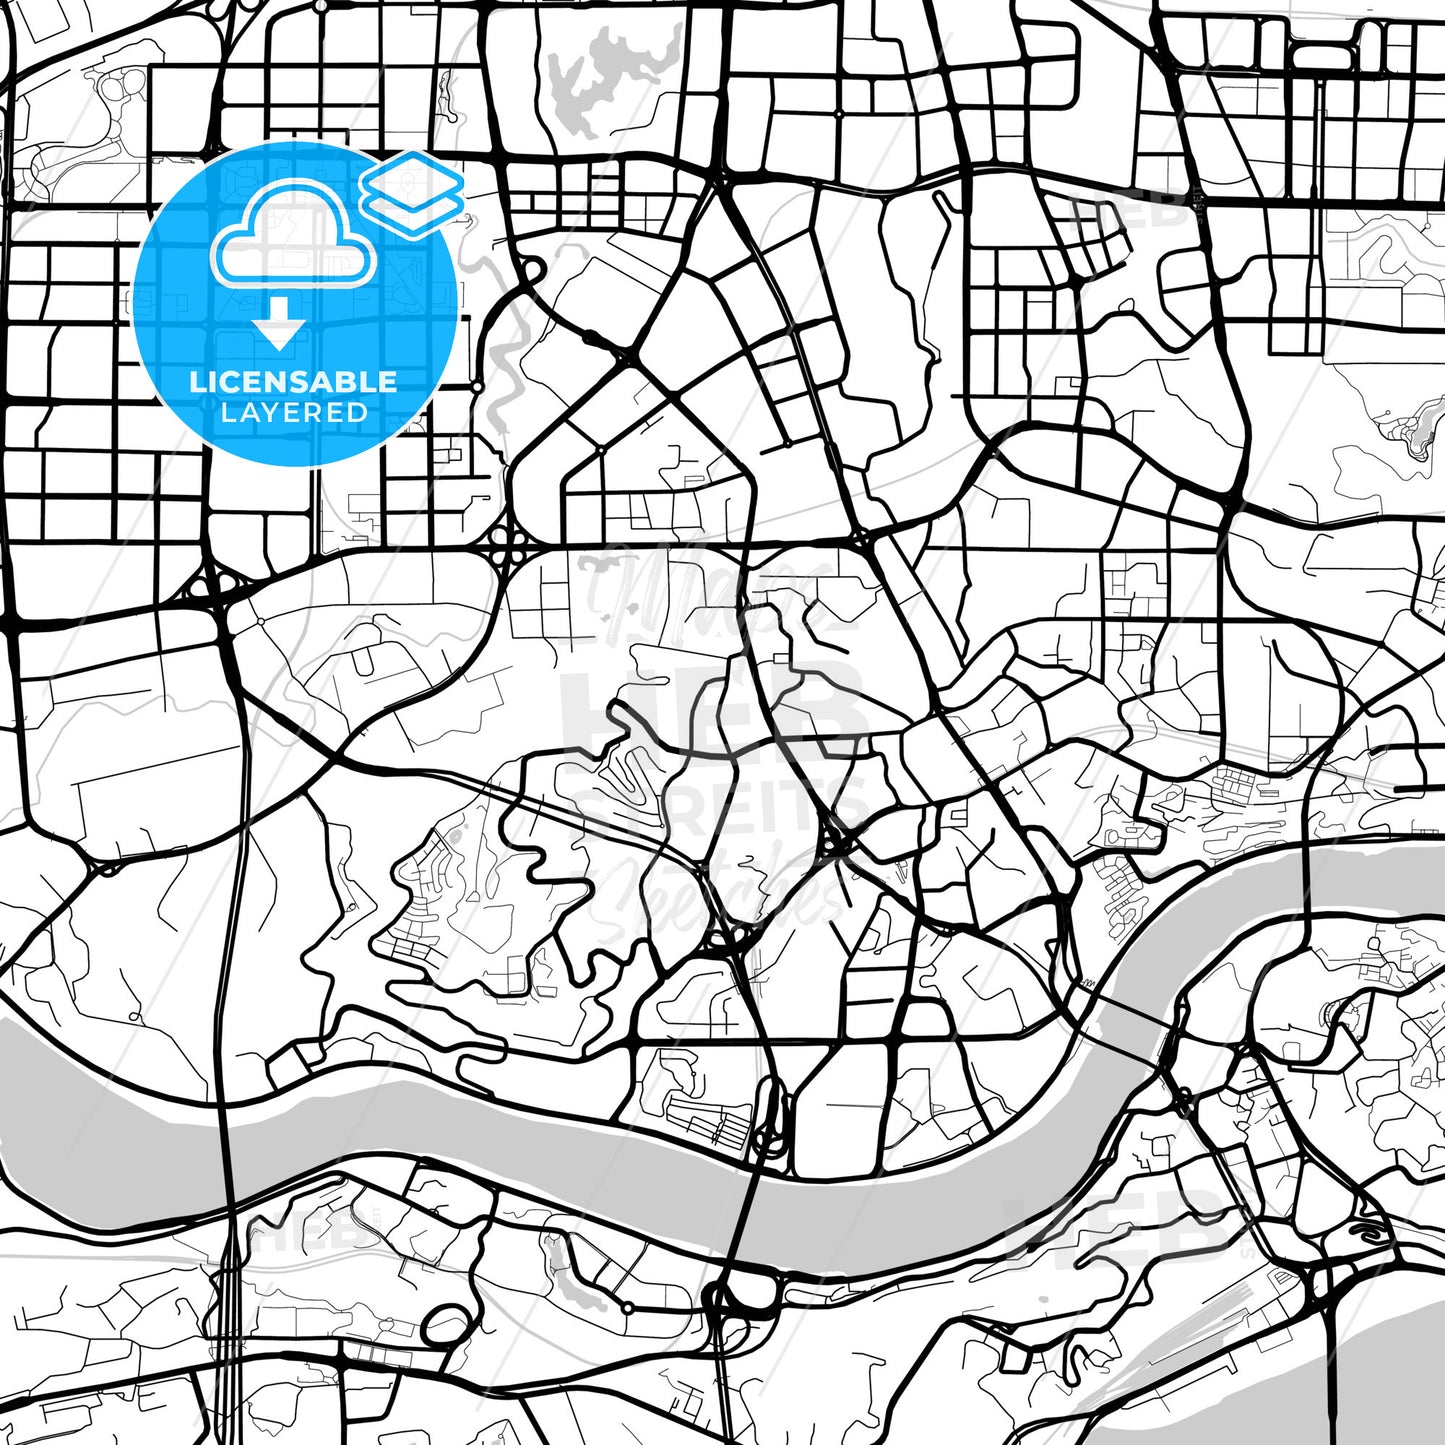 Layered PDF map of Chongqing, China